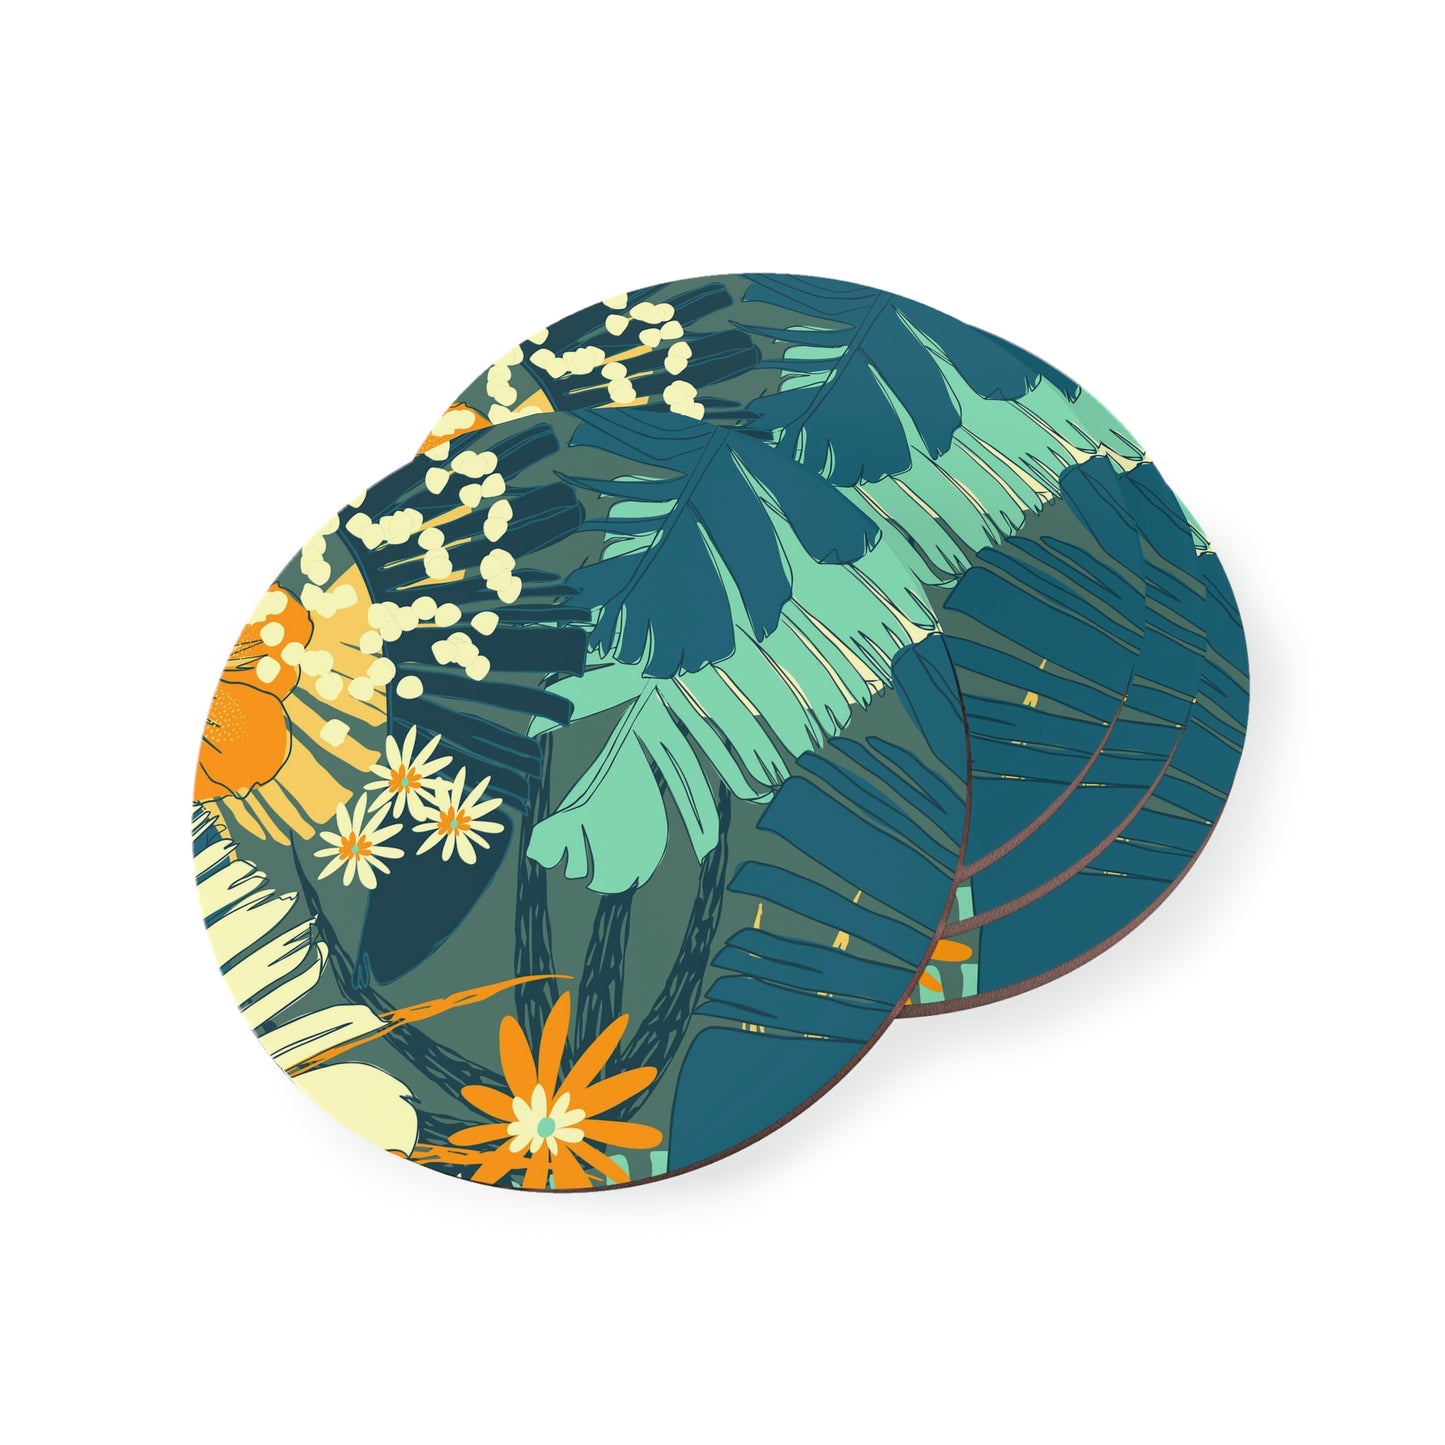 Jungle Blues Collection Coasters, Designer Tropical Print Coasters